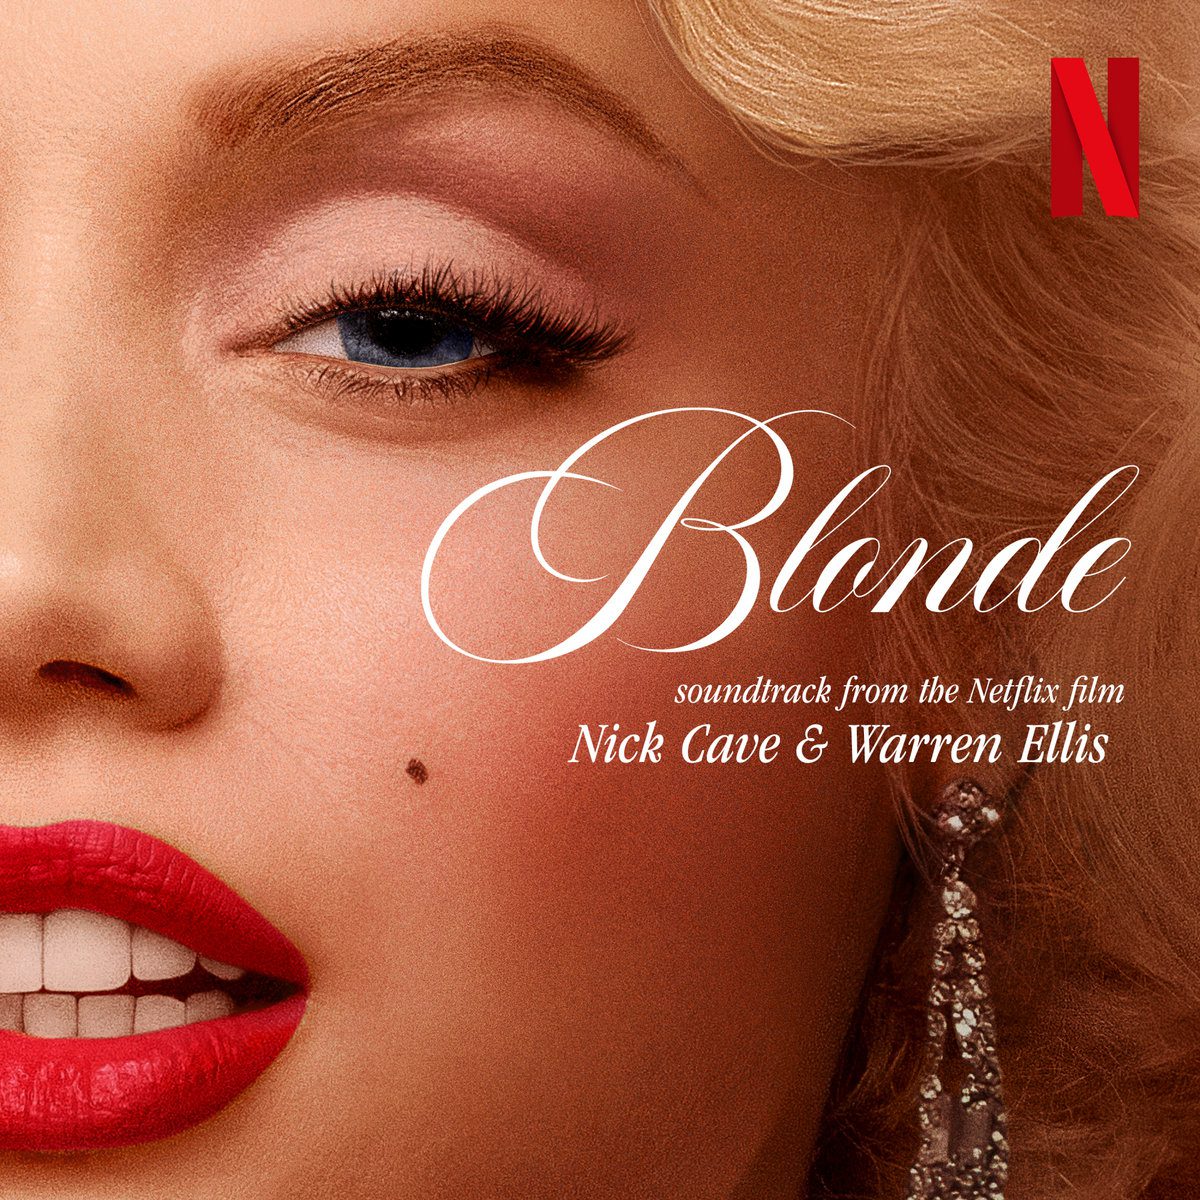 Nick Cave and Warren Ellis – Blonde, Soundtrack From Netflix Film